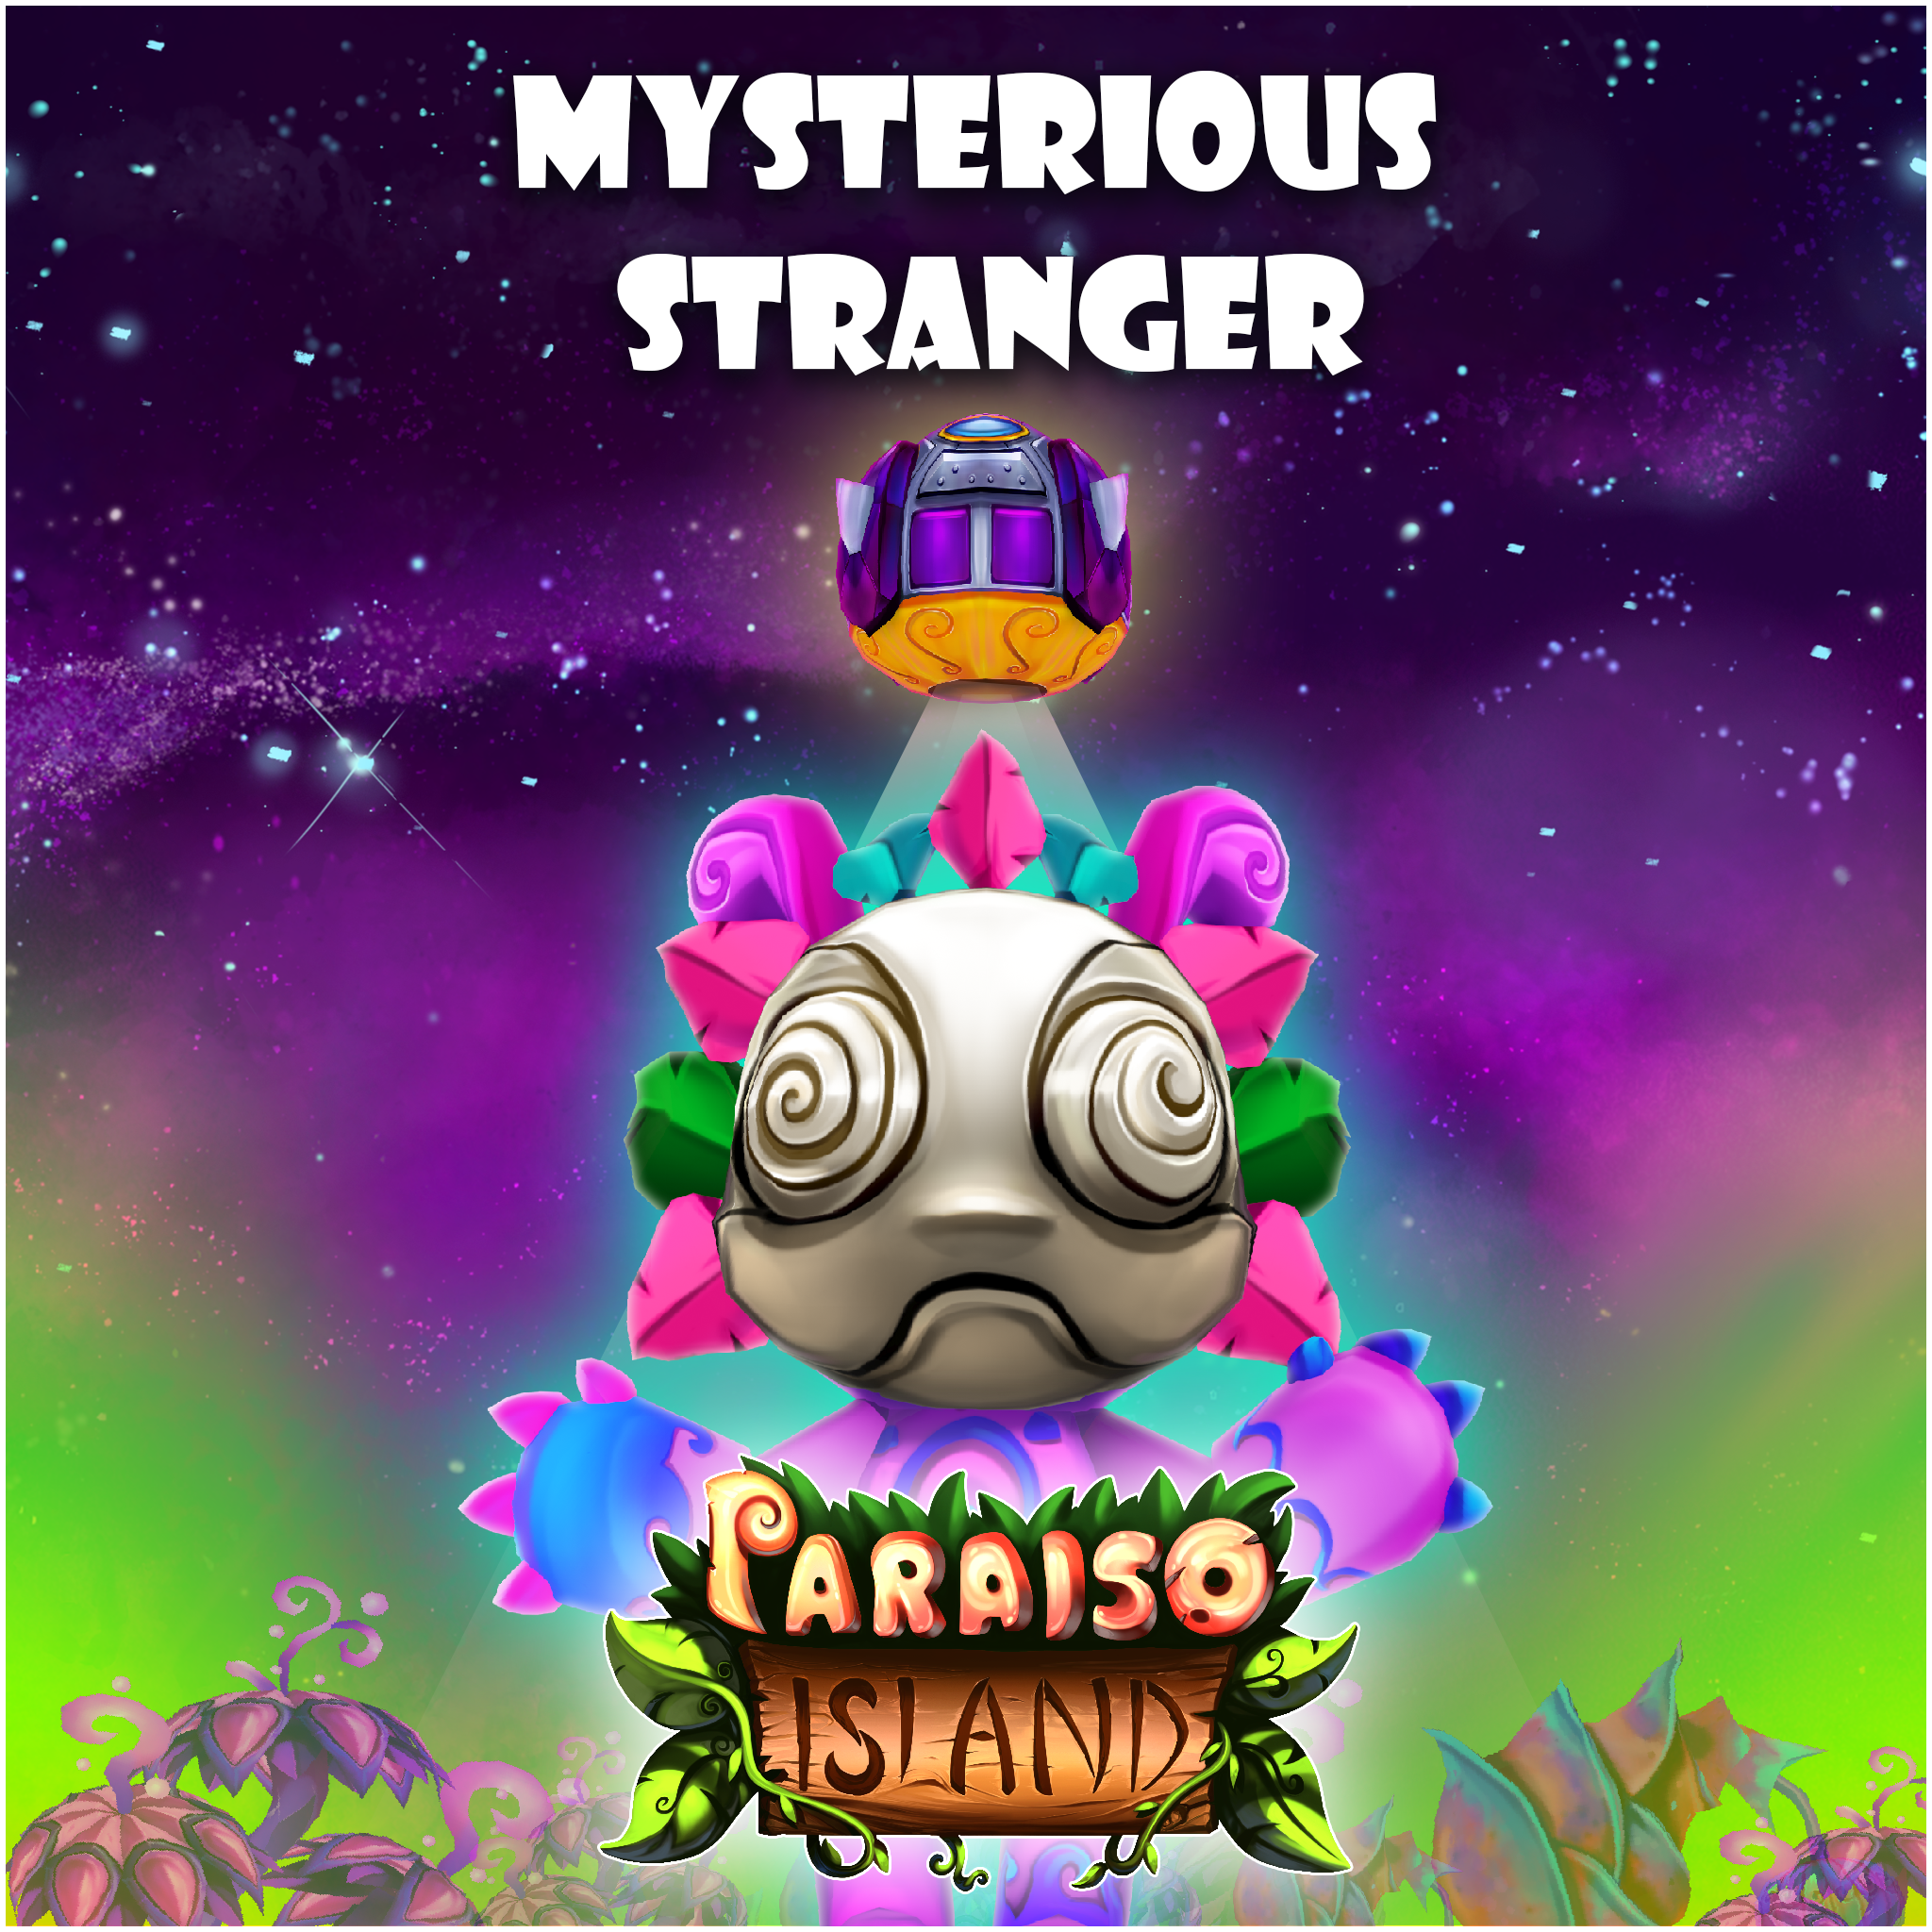 Paraiso Island Mysterious Stranger